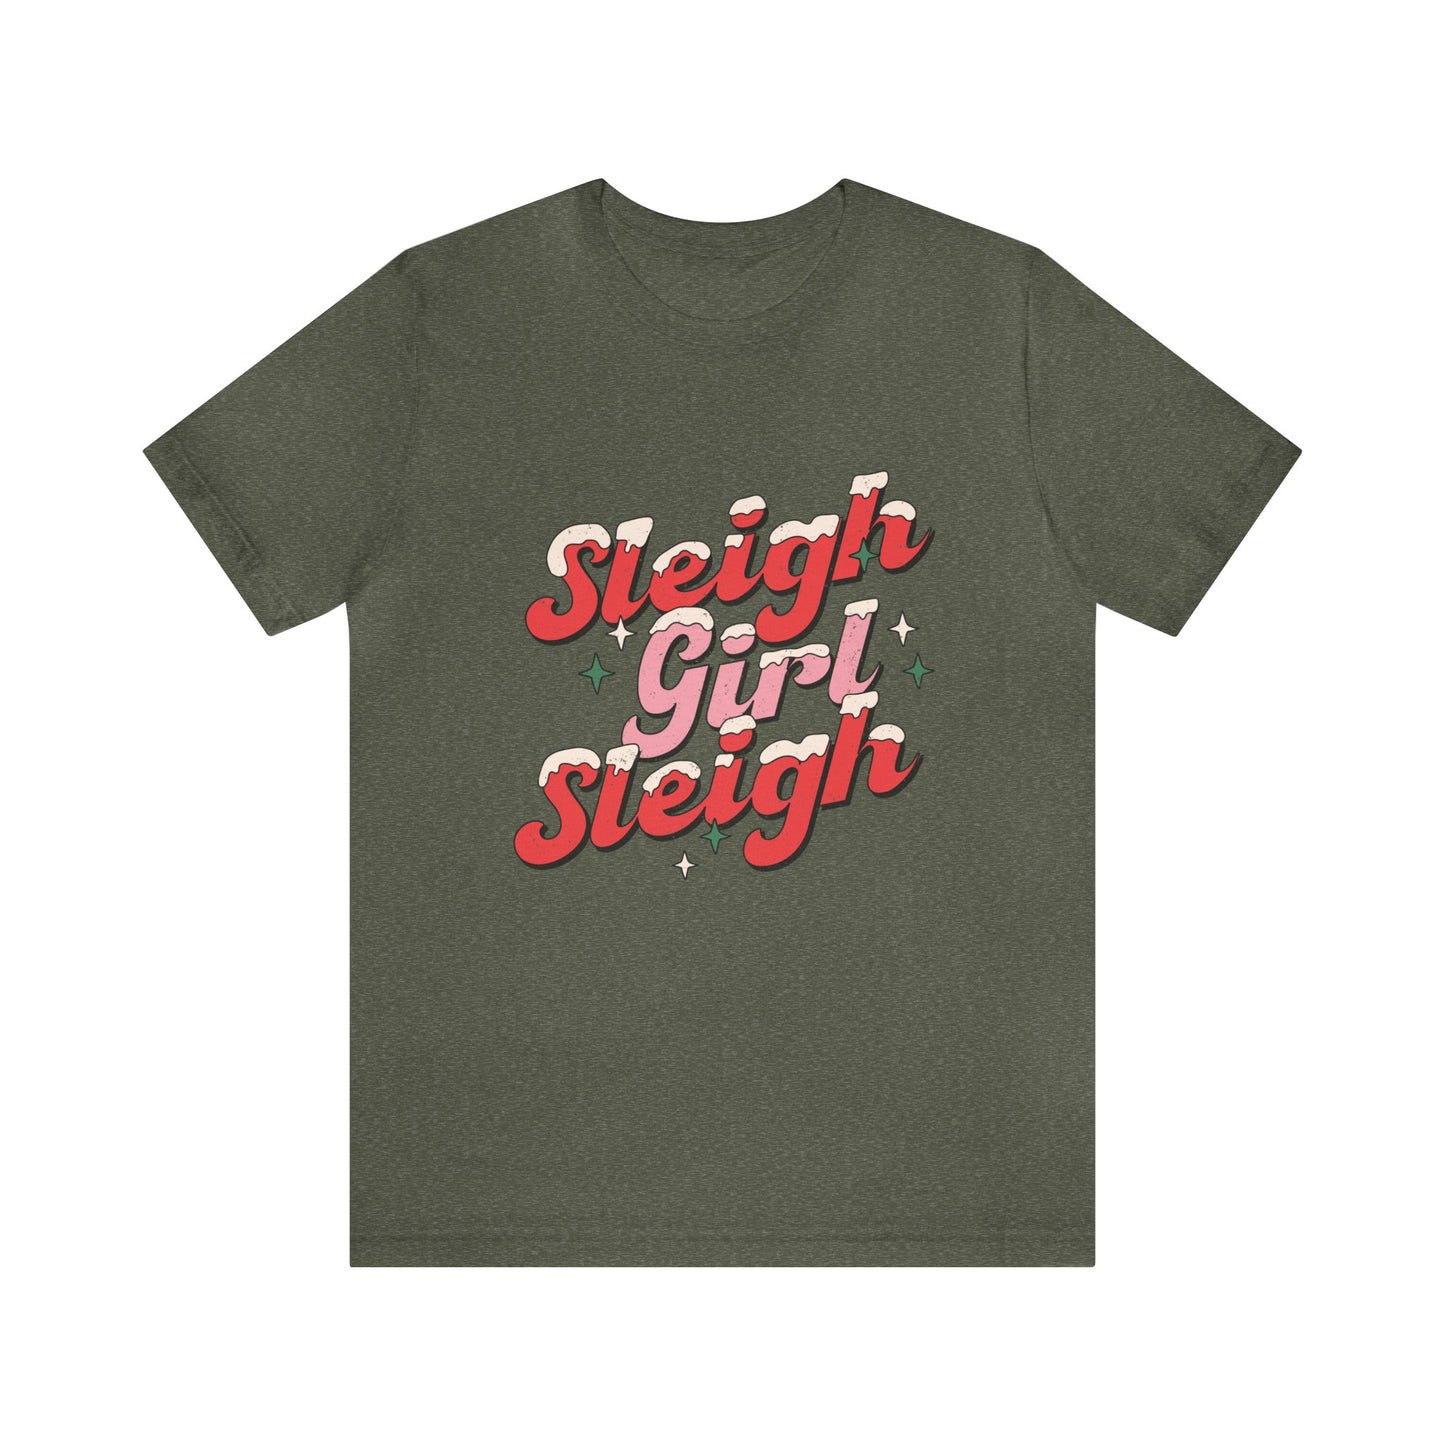 Sleigh Girl Sleigh Women's Short Sleeve Christmas T Shirt